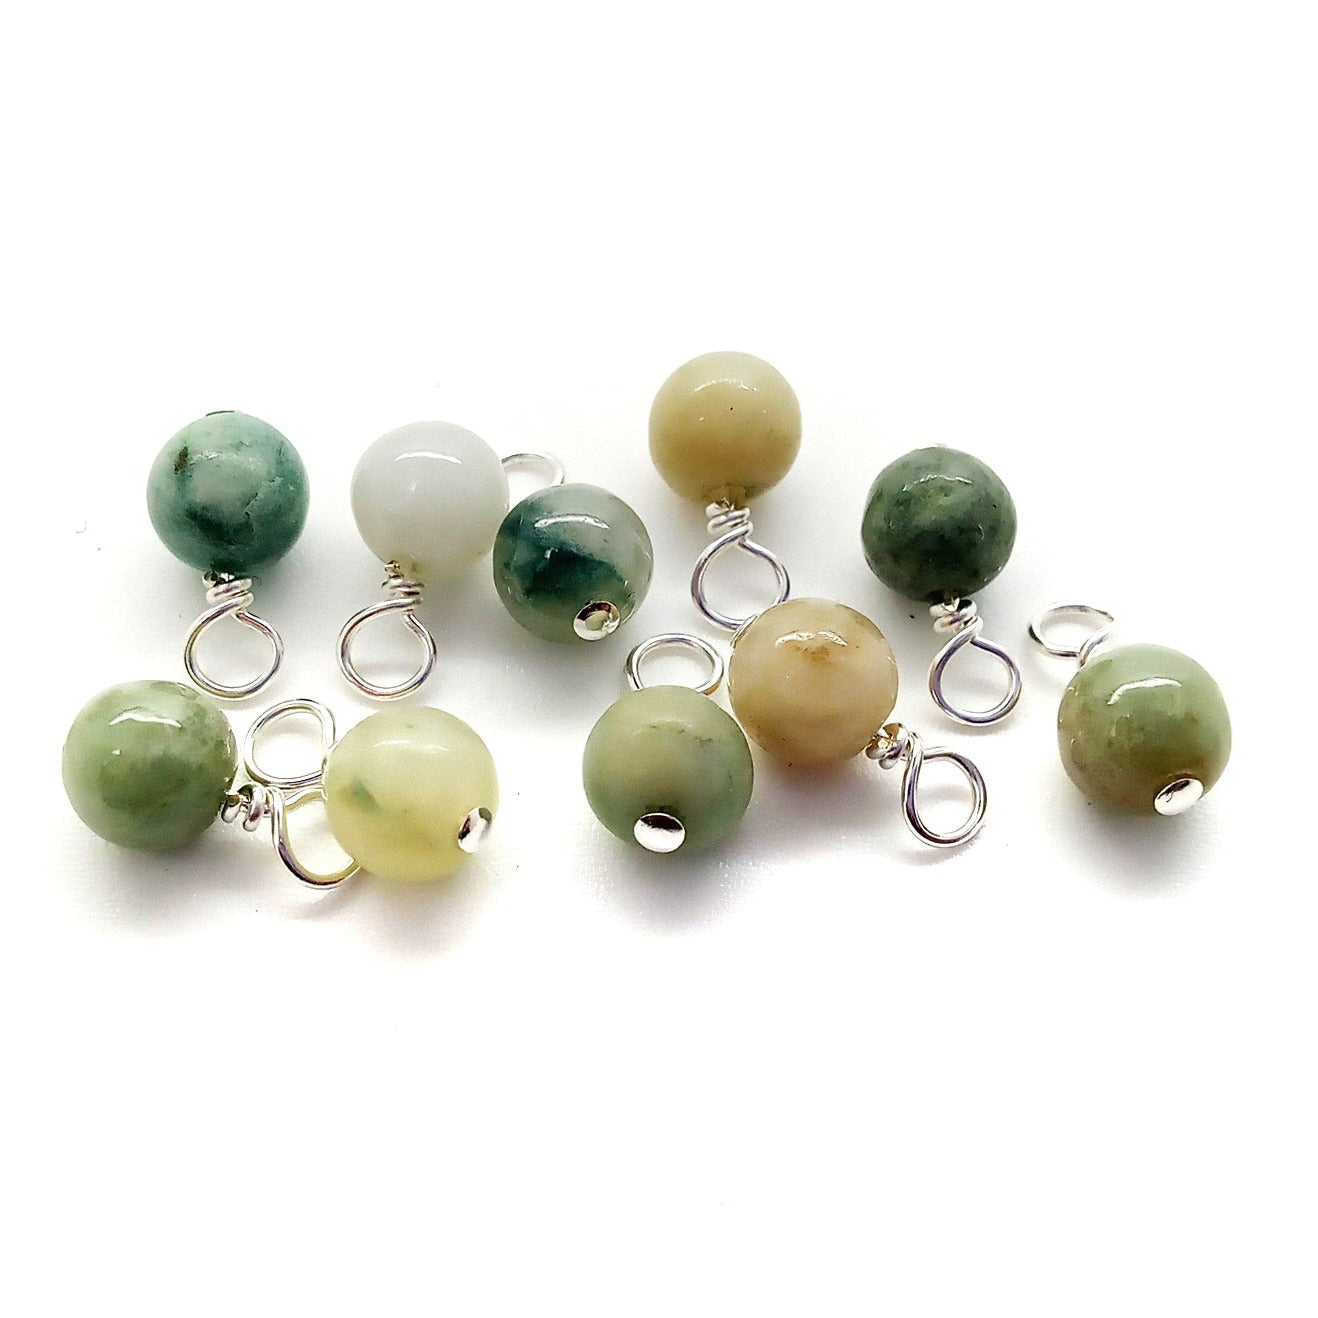 Burma green jade 6mm gemstone bead dangle charms, made by Adorabilities.